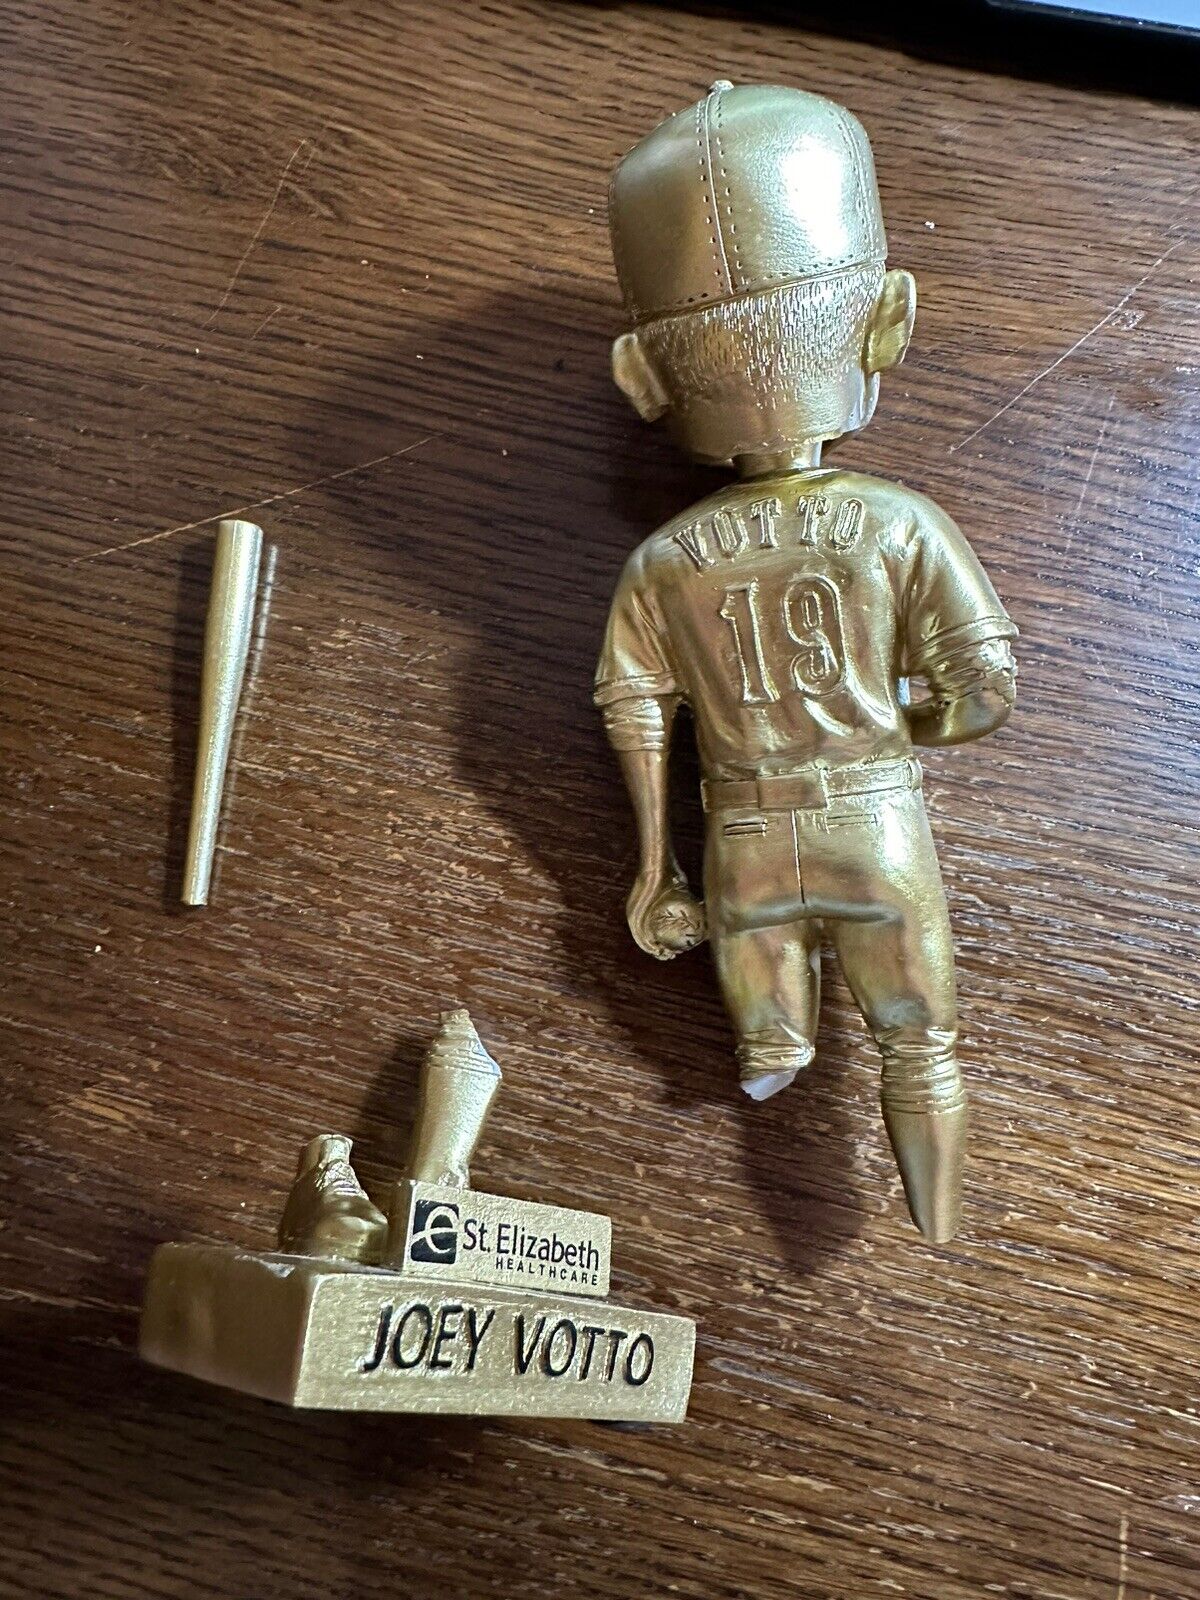 2023 Joey Votto Gold Bobblehead - broken